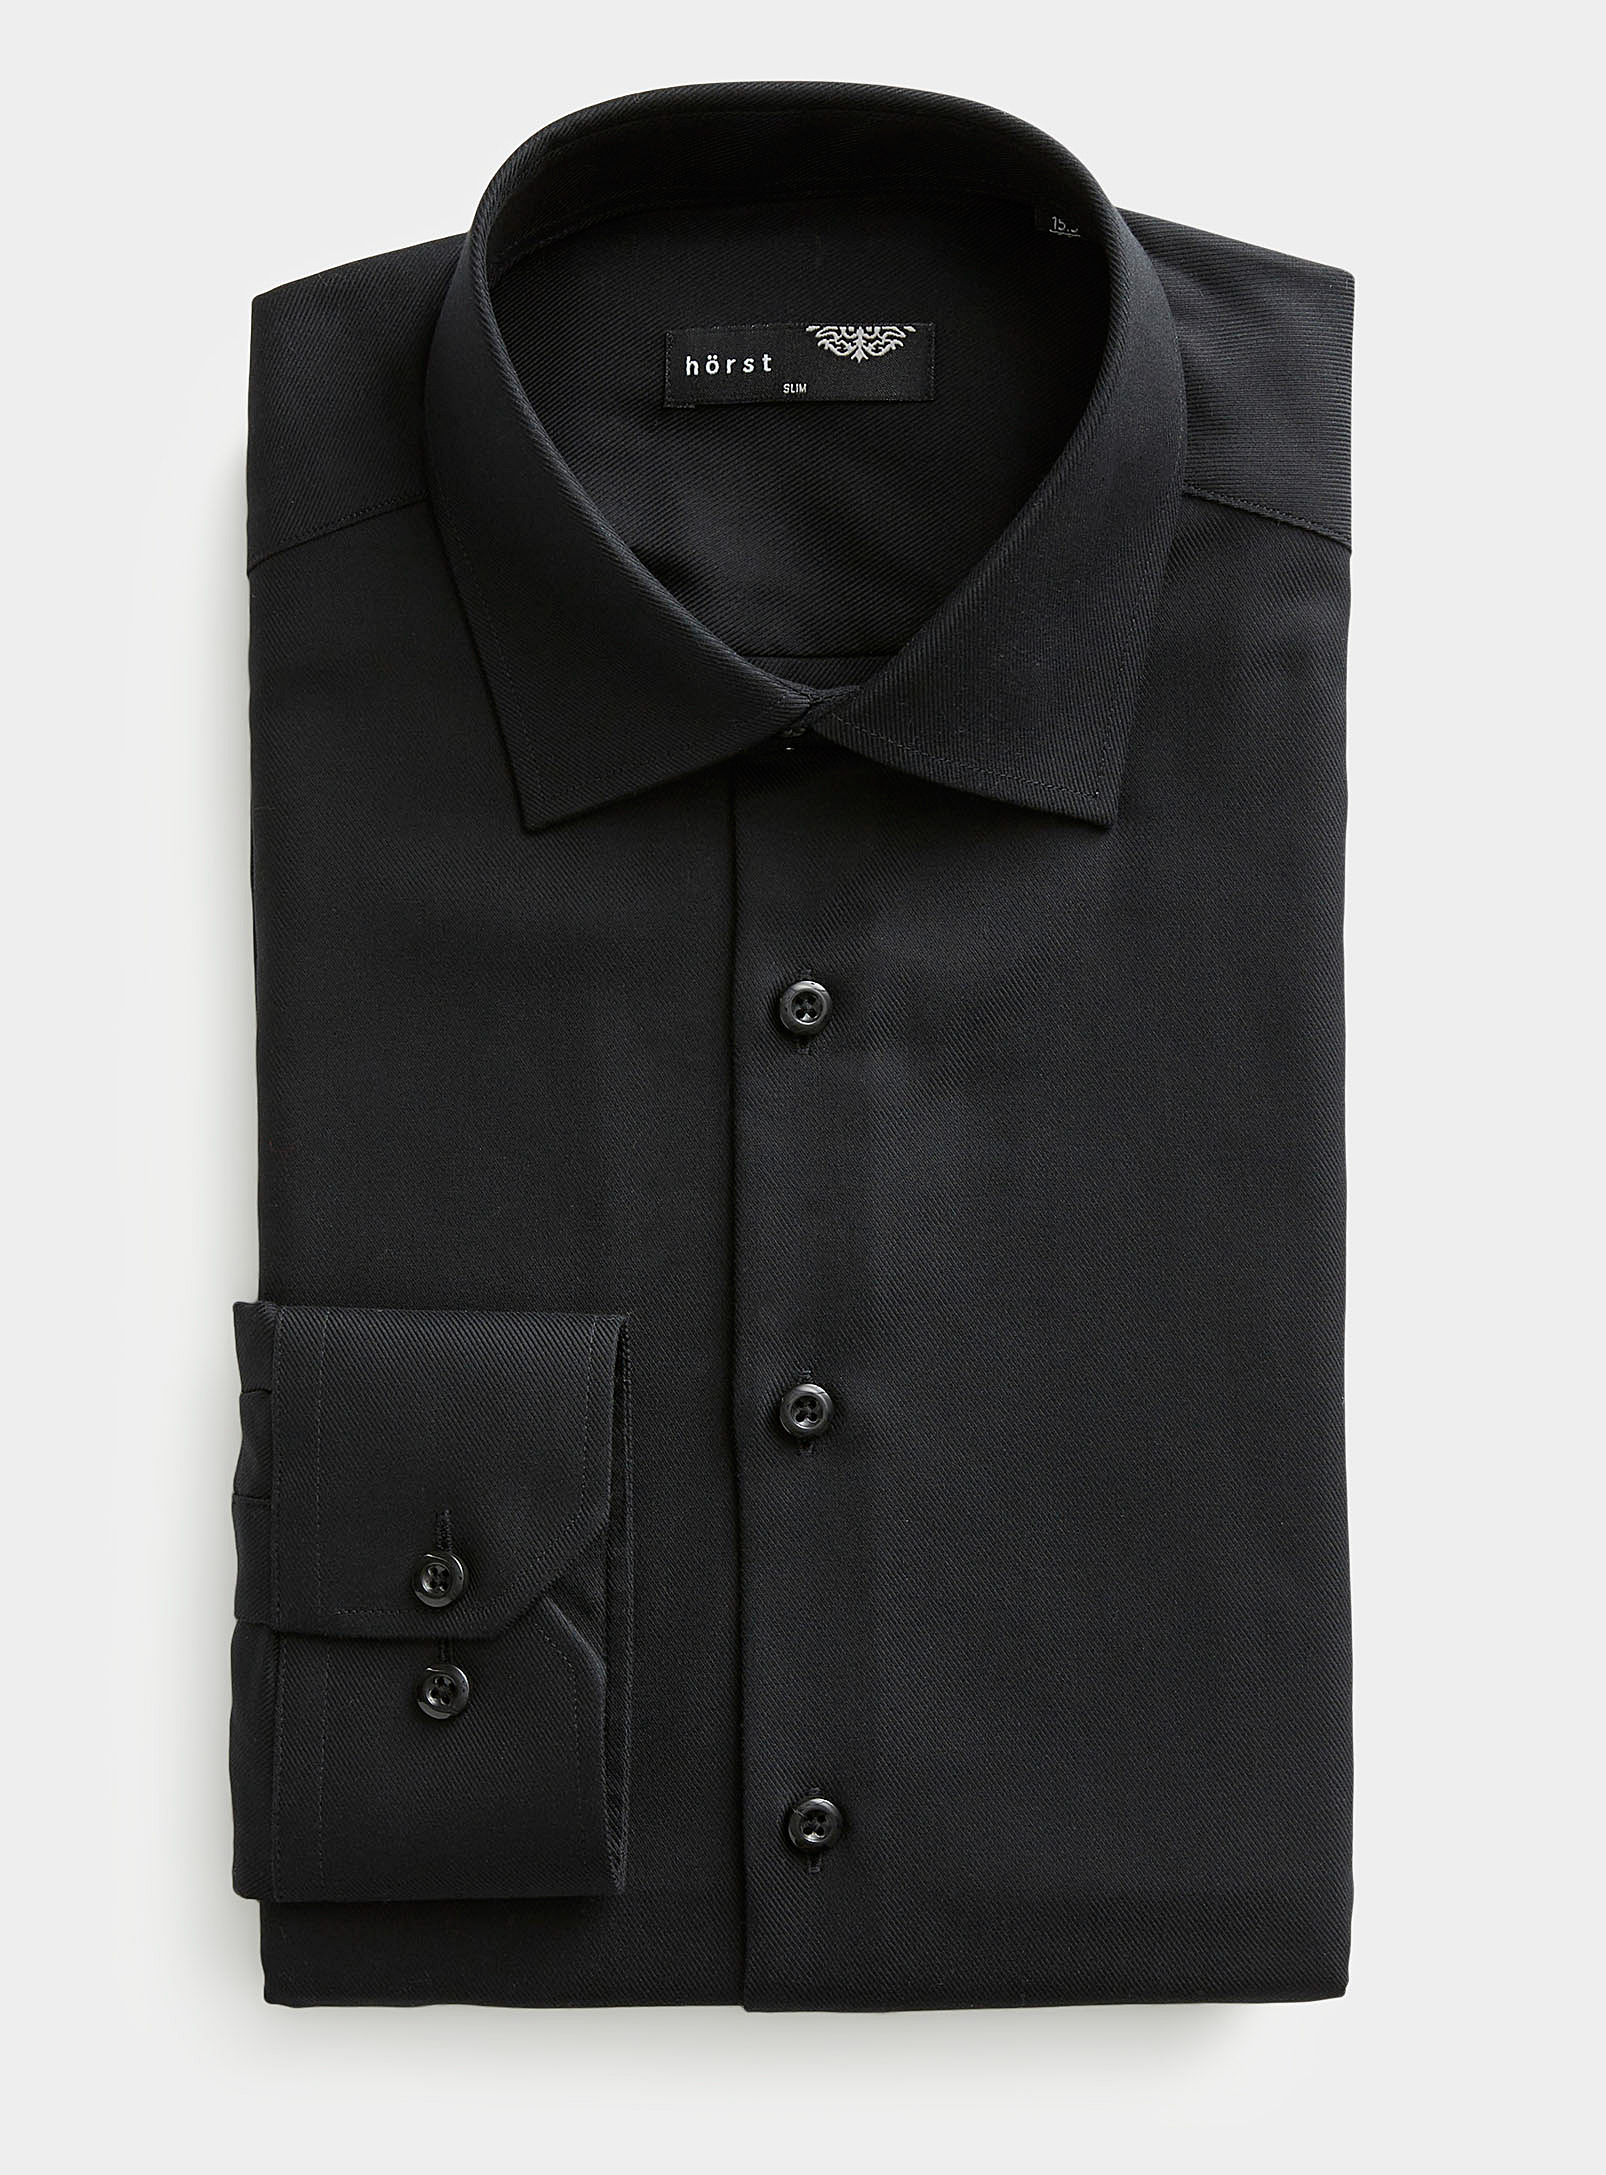 Horst Monochrome Twill Shirt Semi-slim Fit In Black